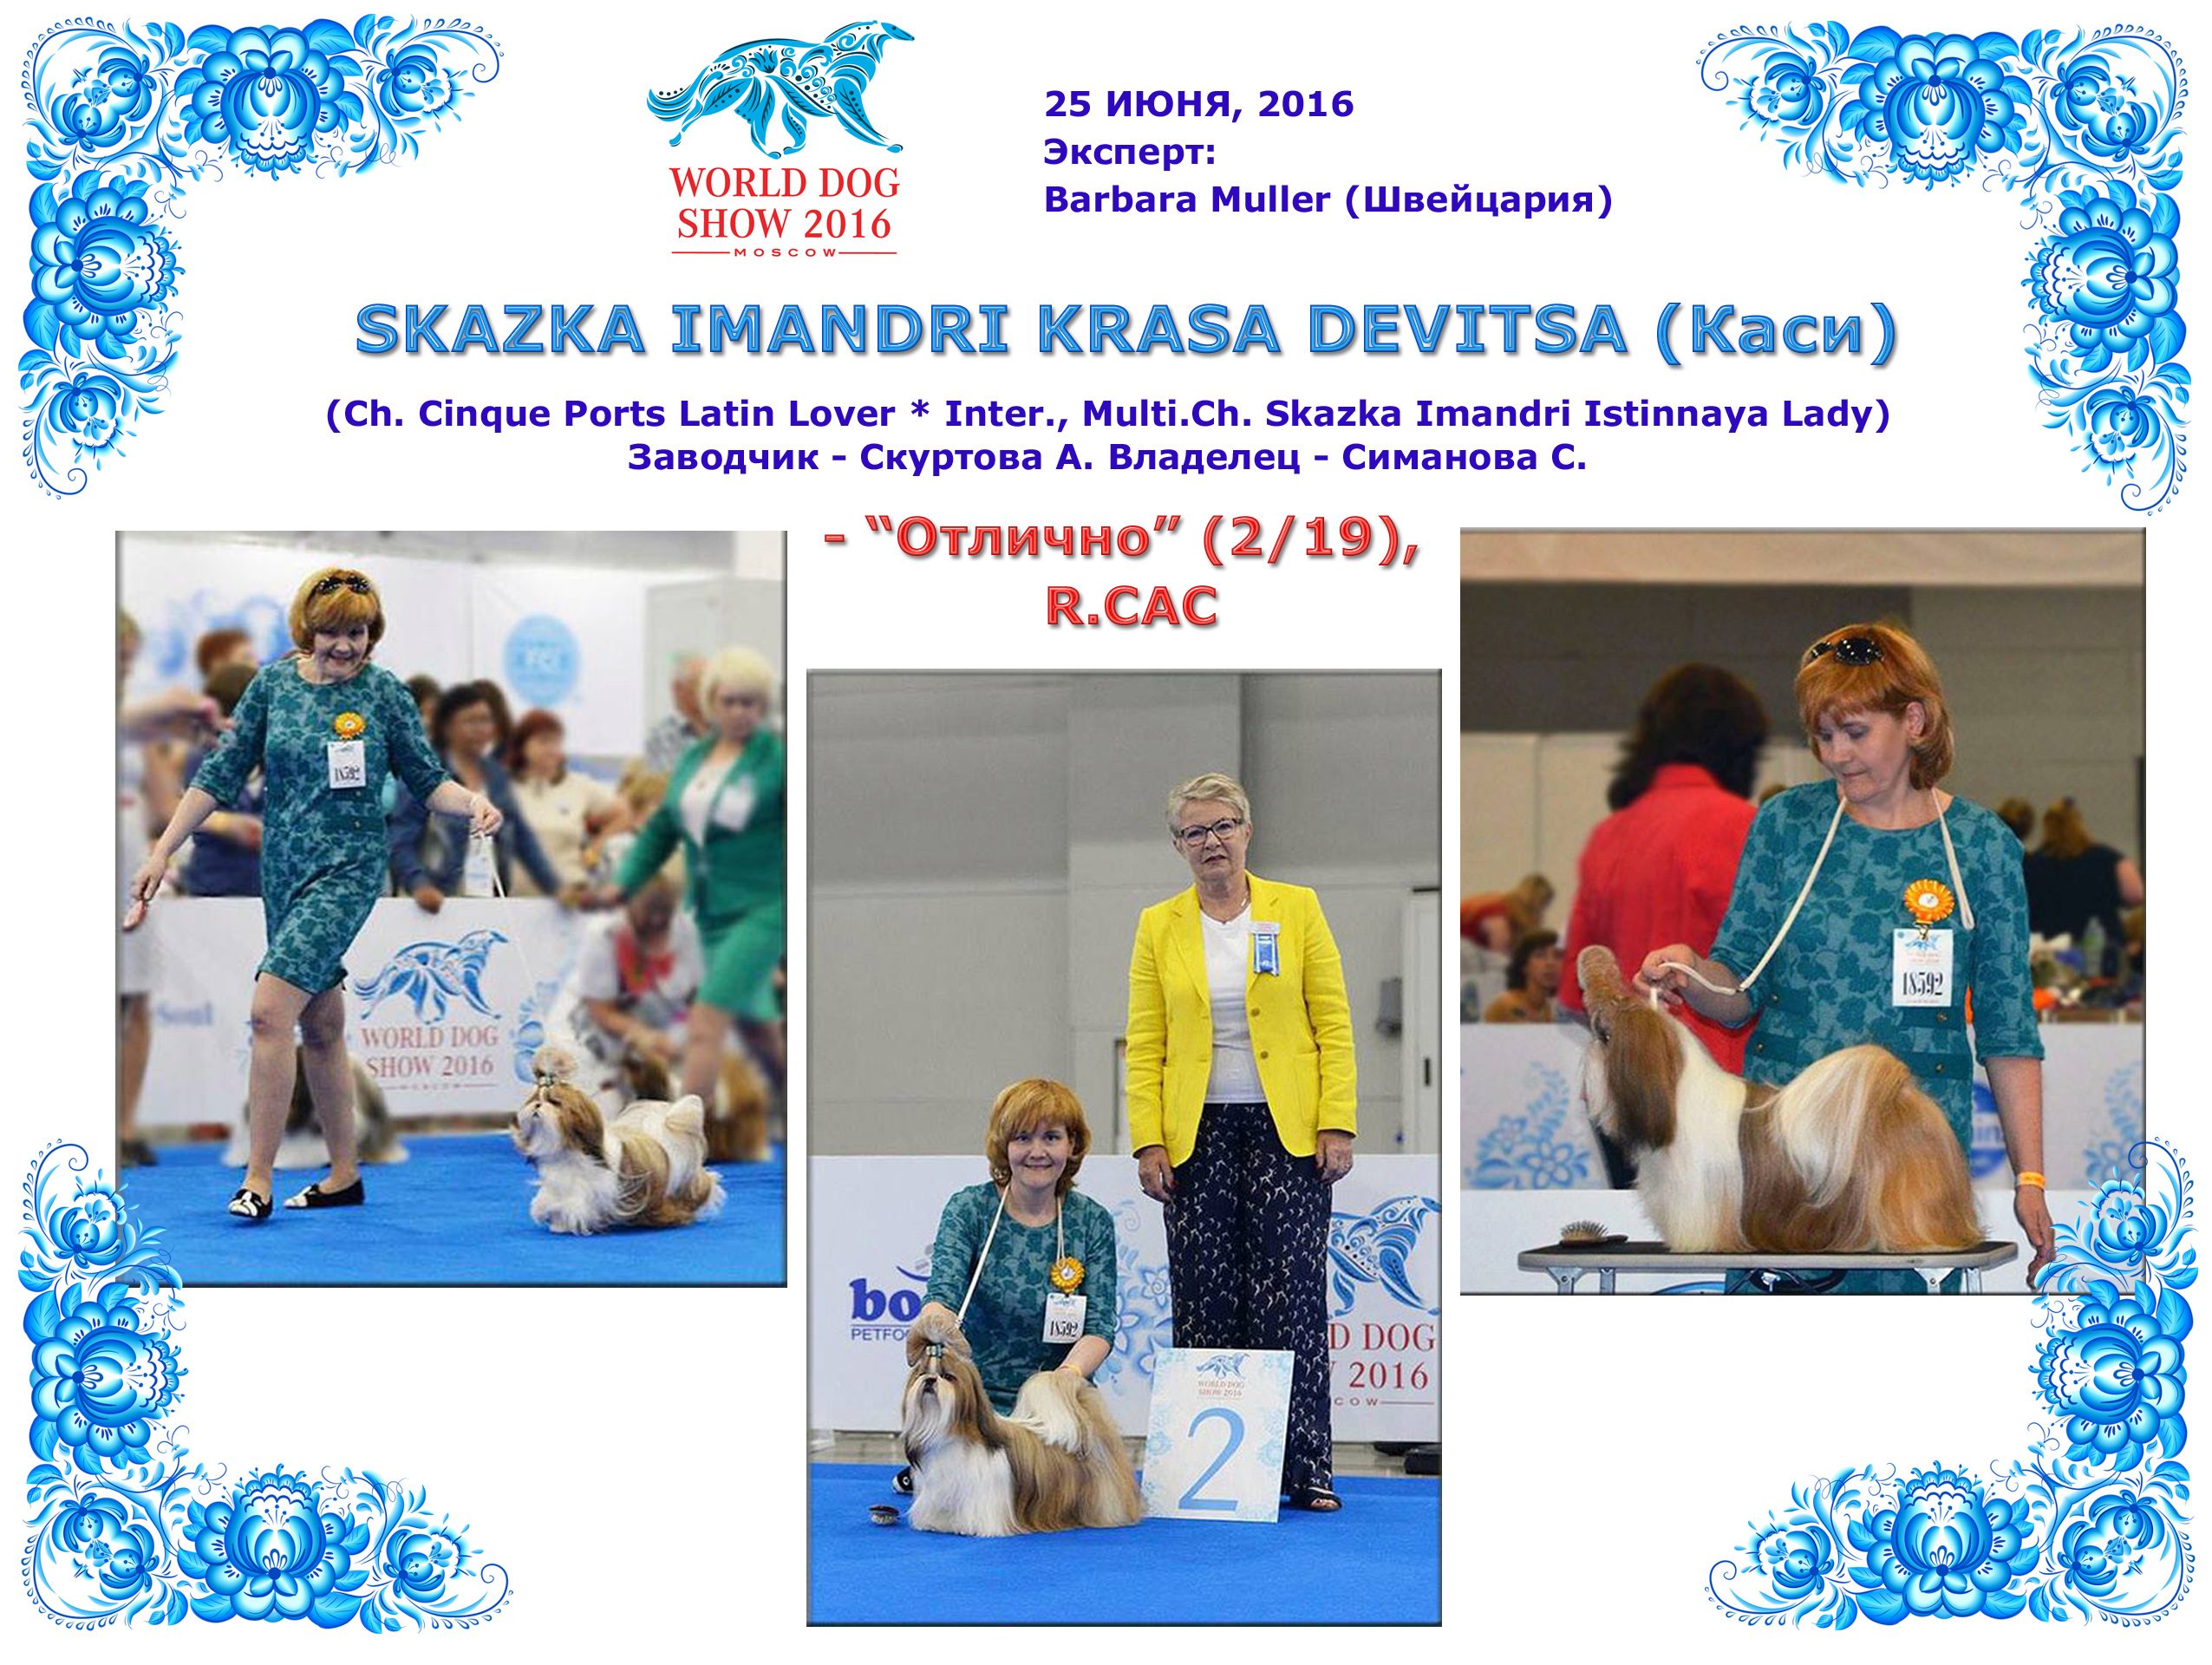 Результаты Каси (Skazka Imandri Krasa Devitsa) на WDS'2016